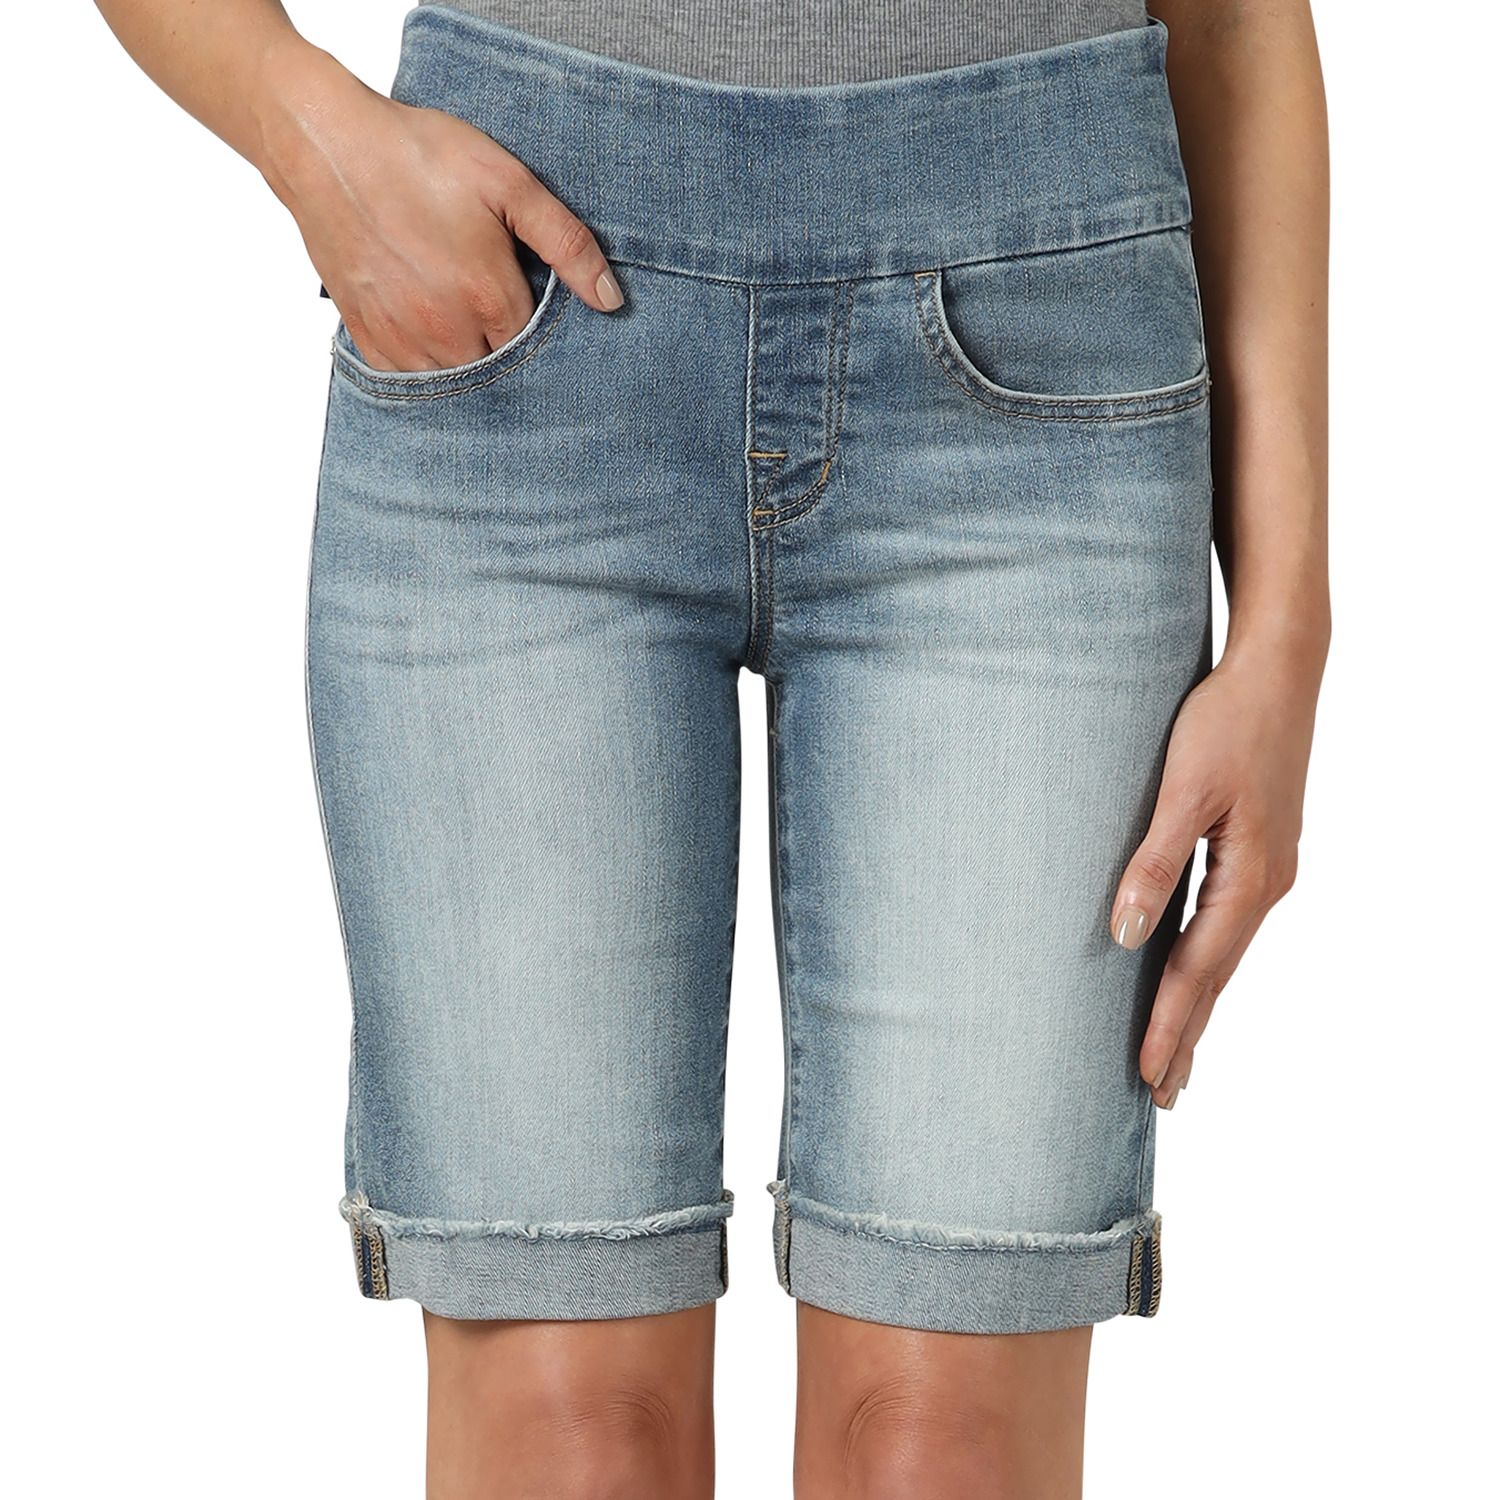 bermuda blue jean shorts